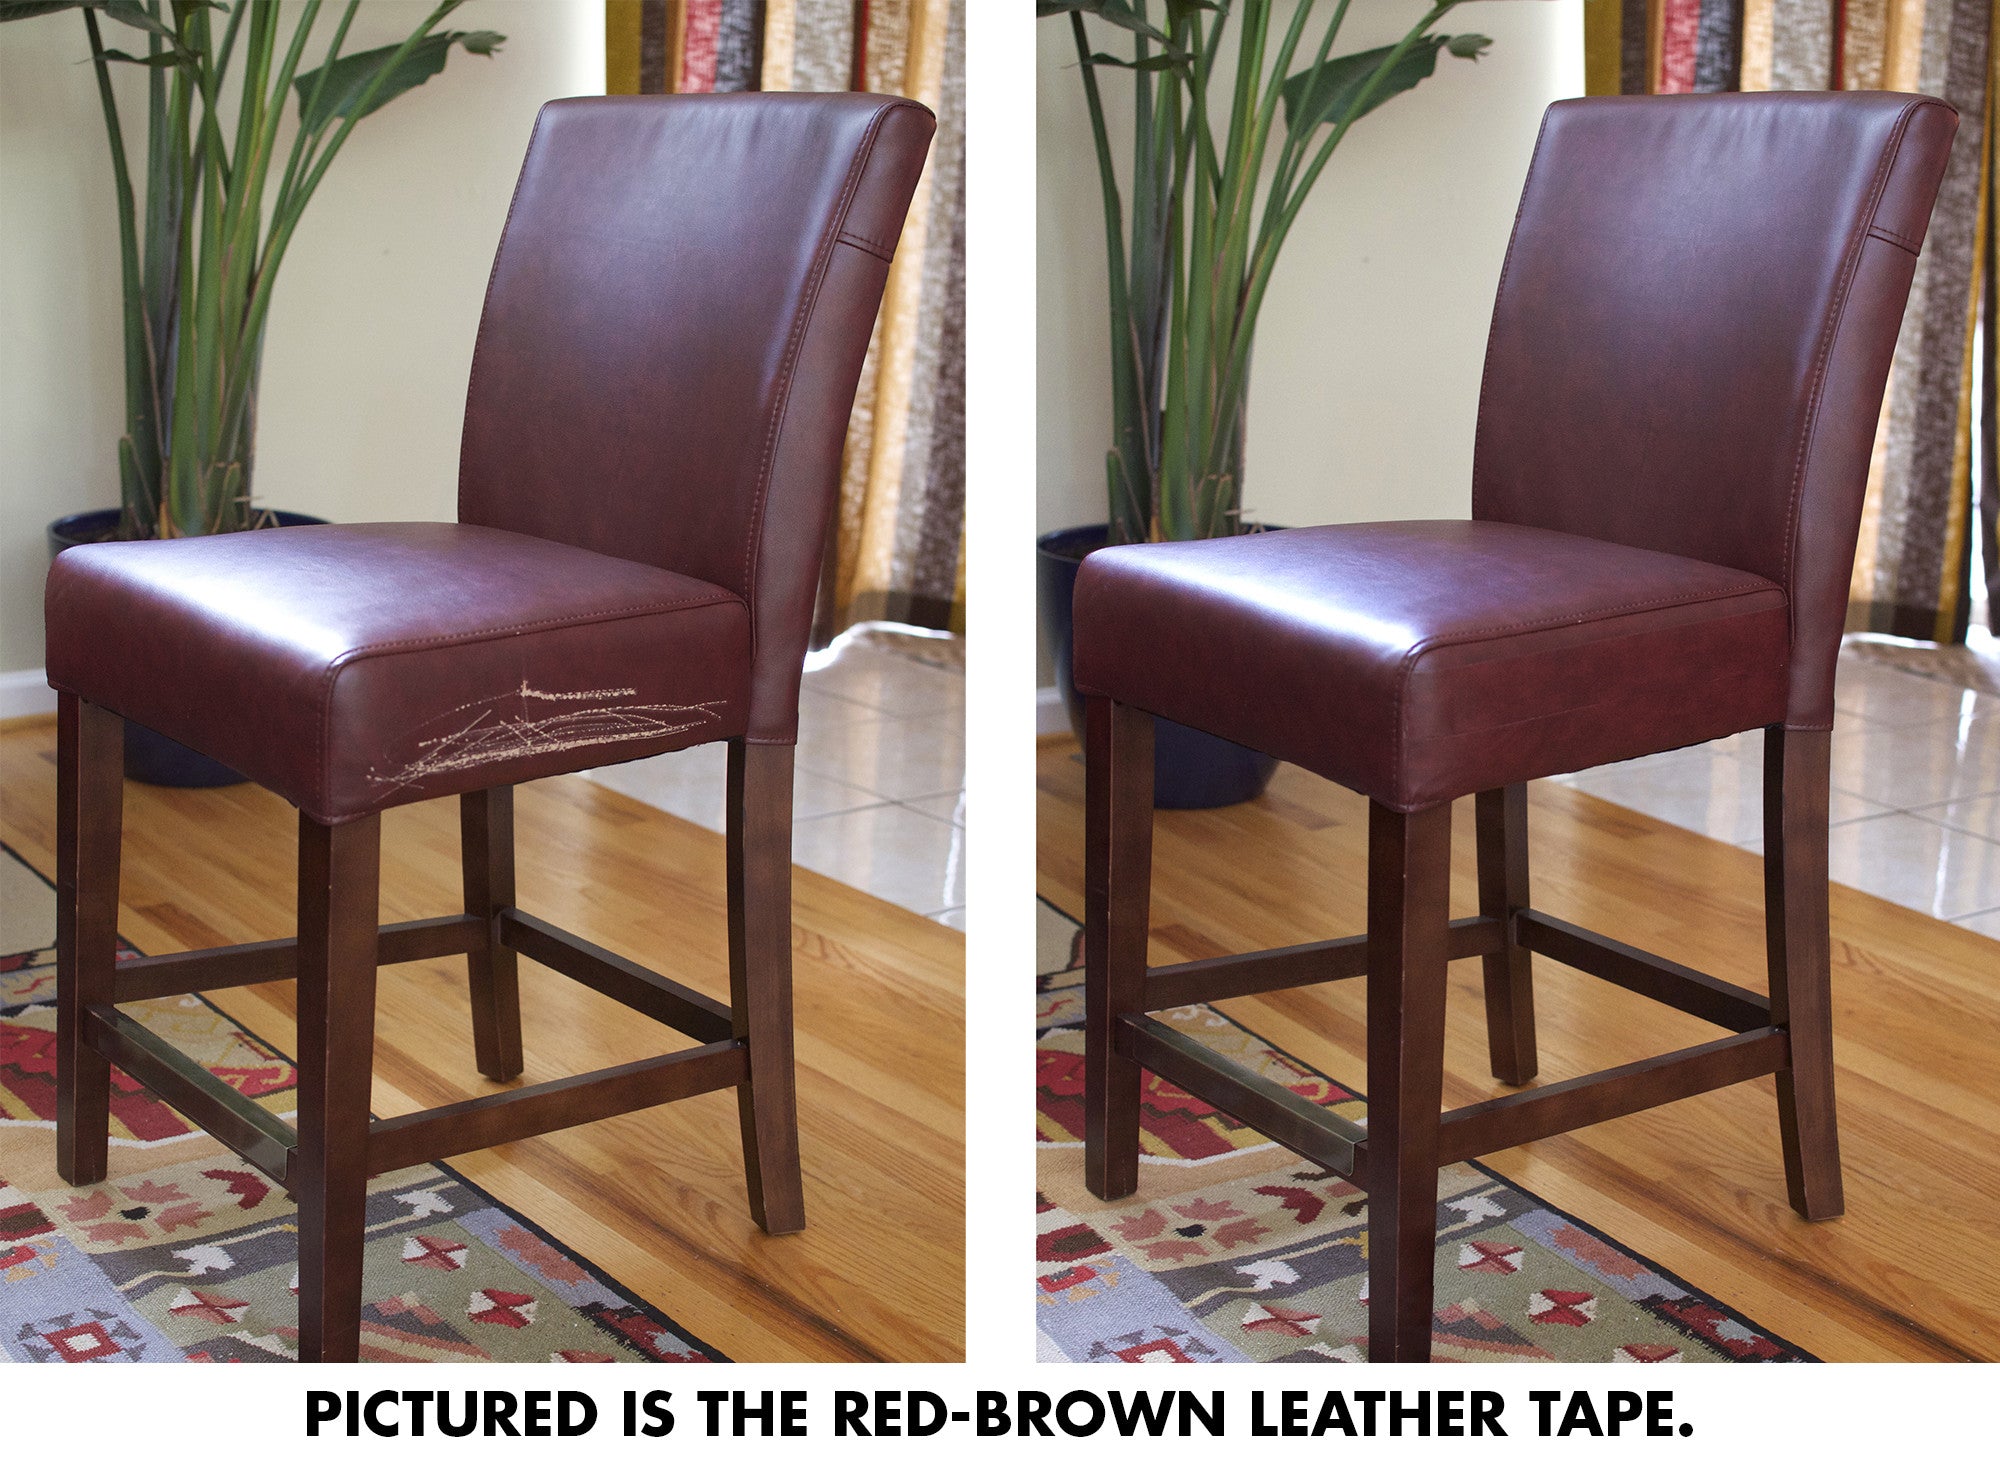 Dark Brown Leather Repair Tape – Match 'N Patch